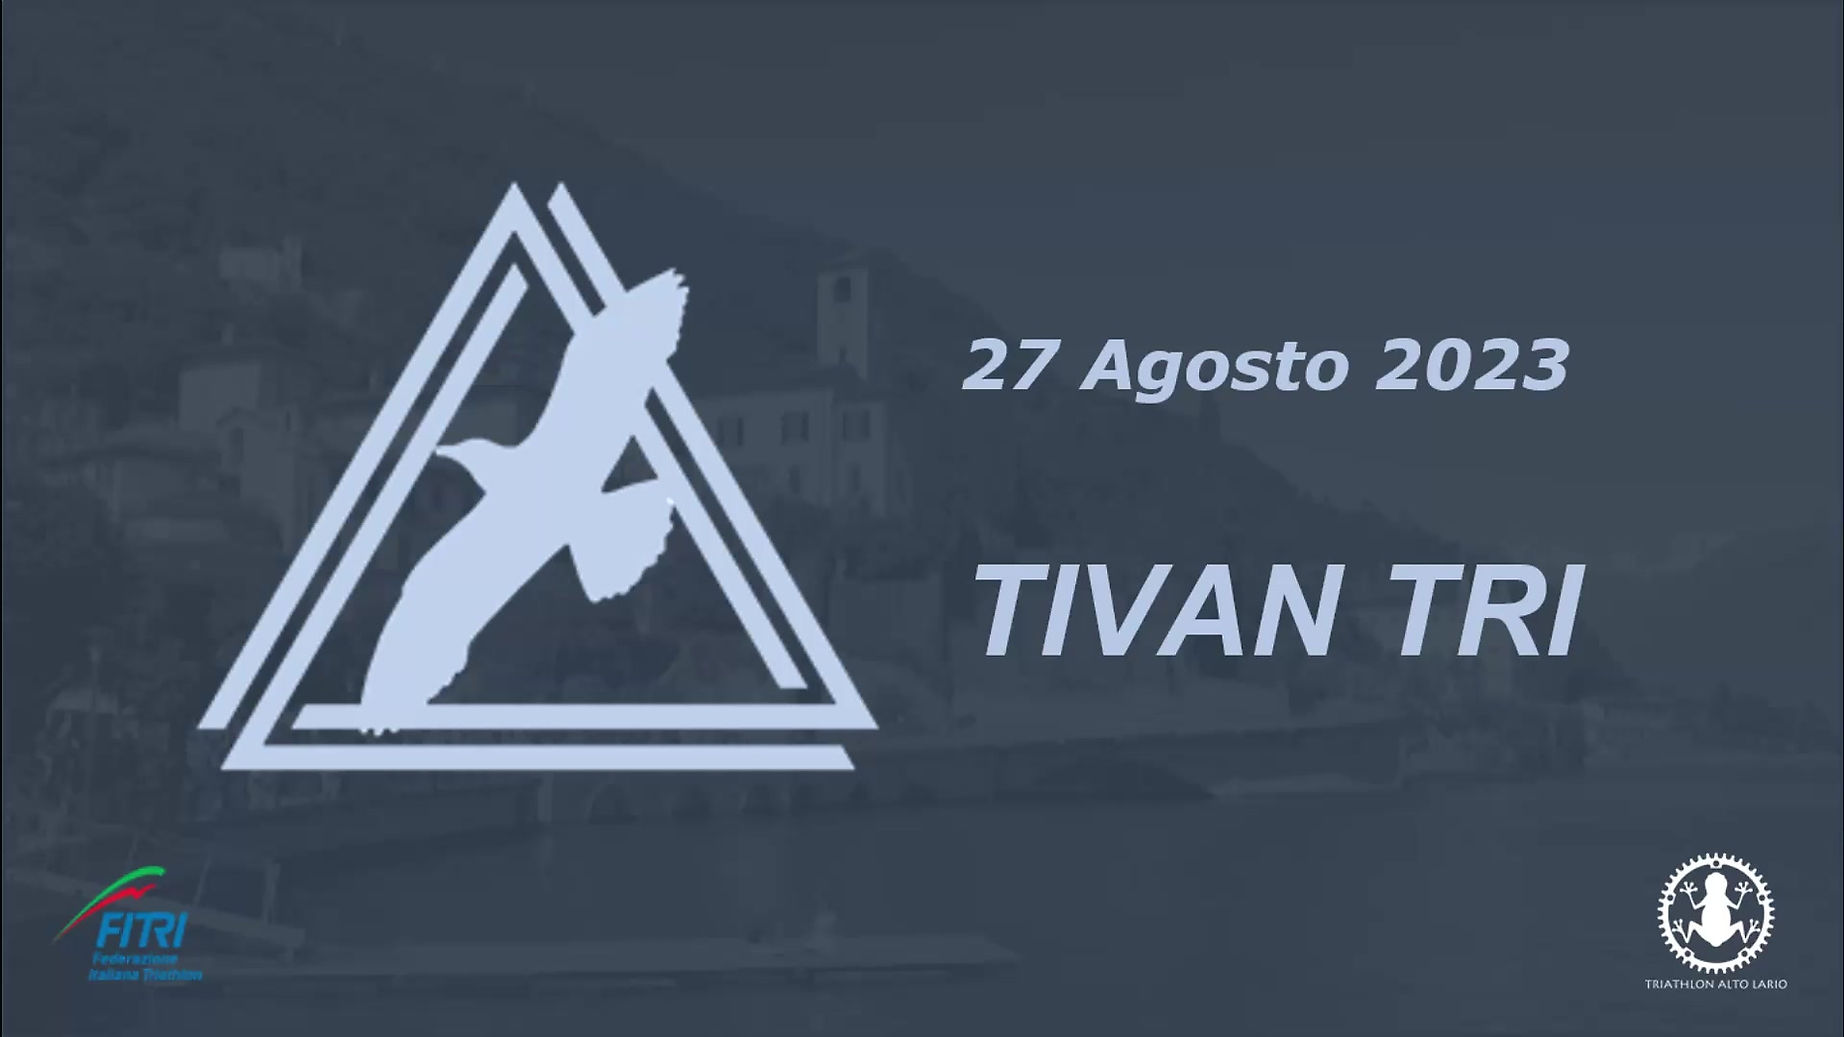 Tivan Tri 2023 - Official